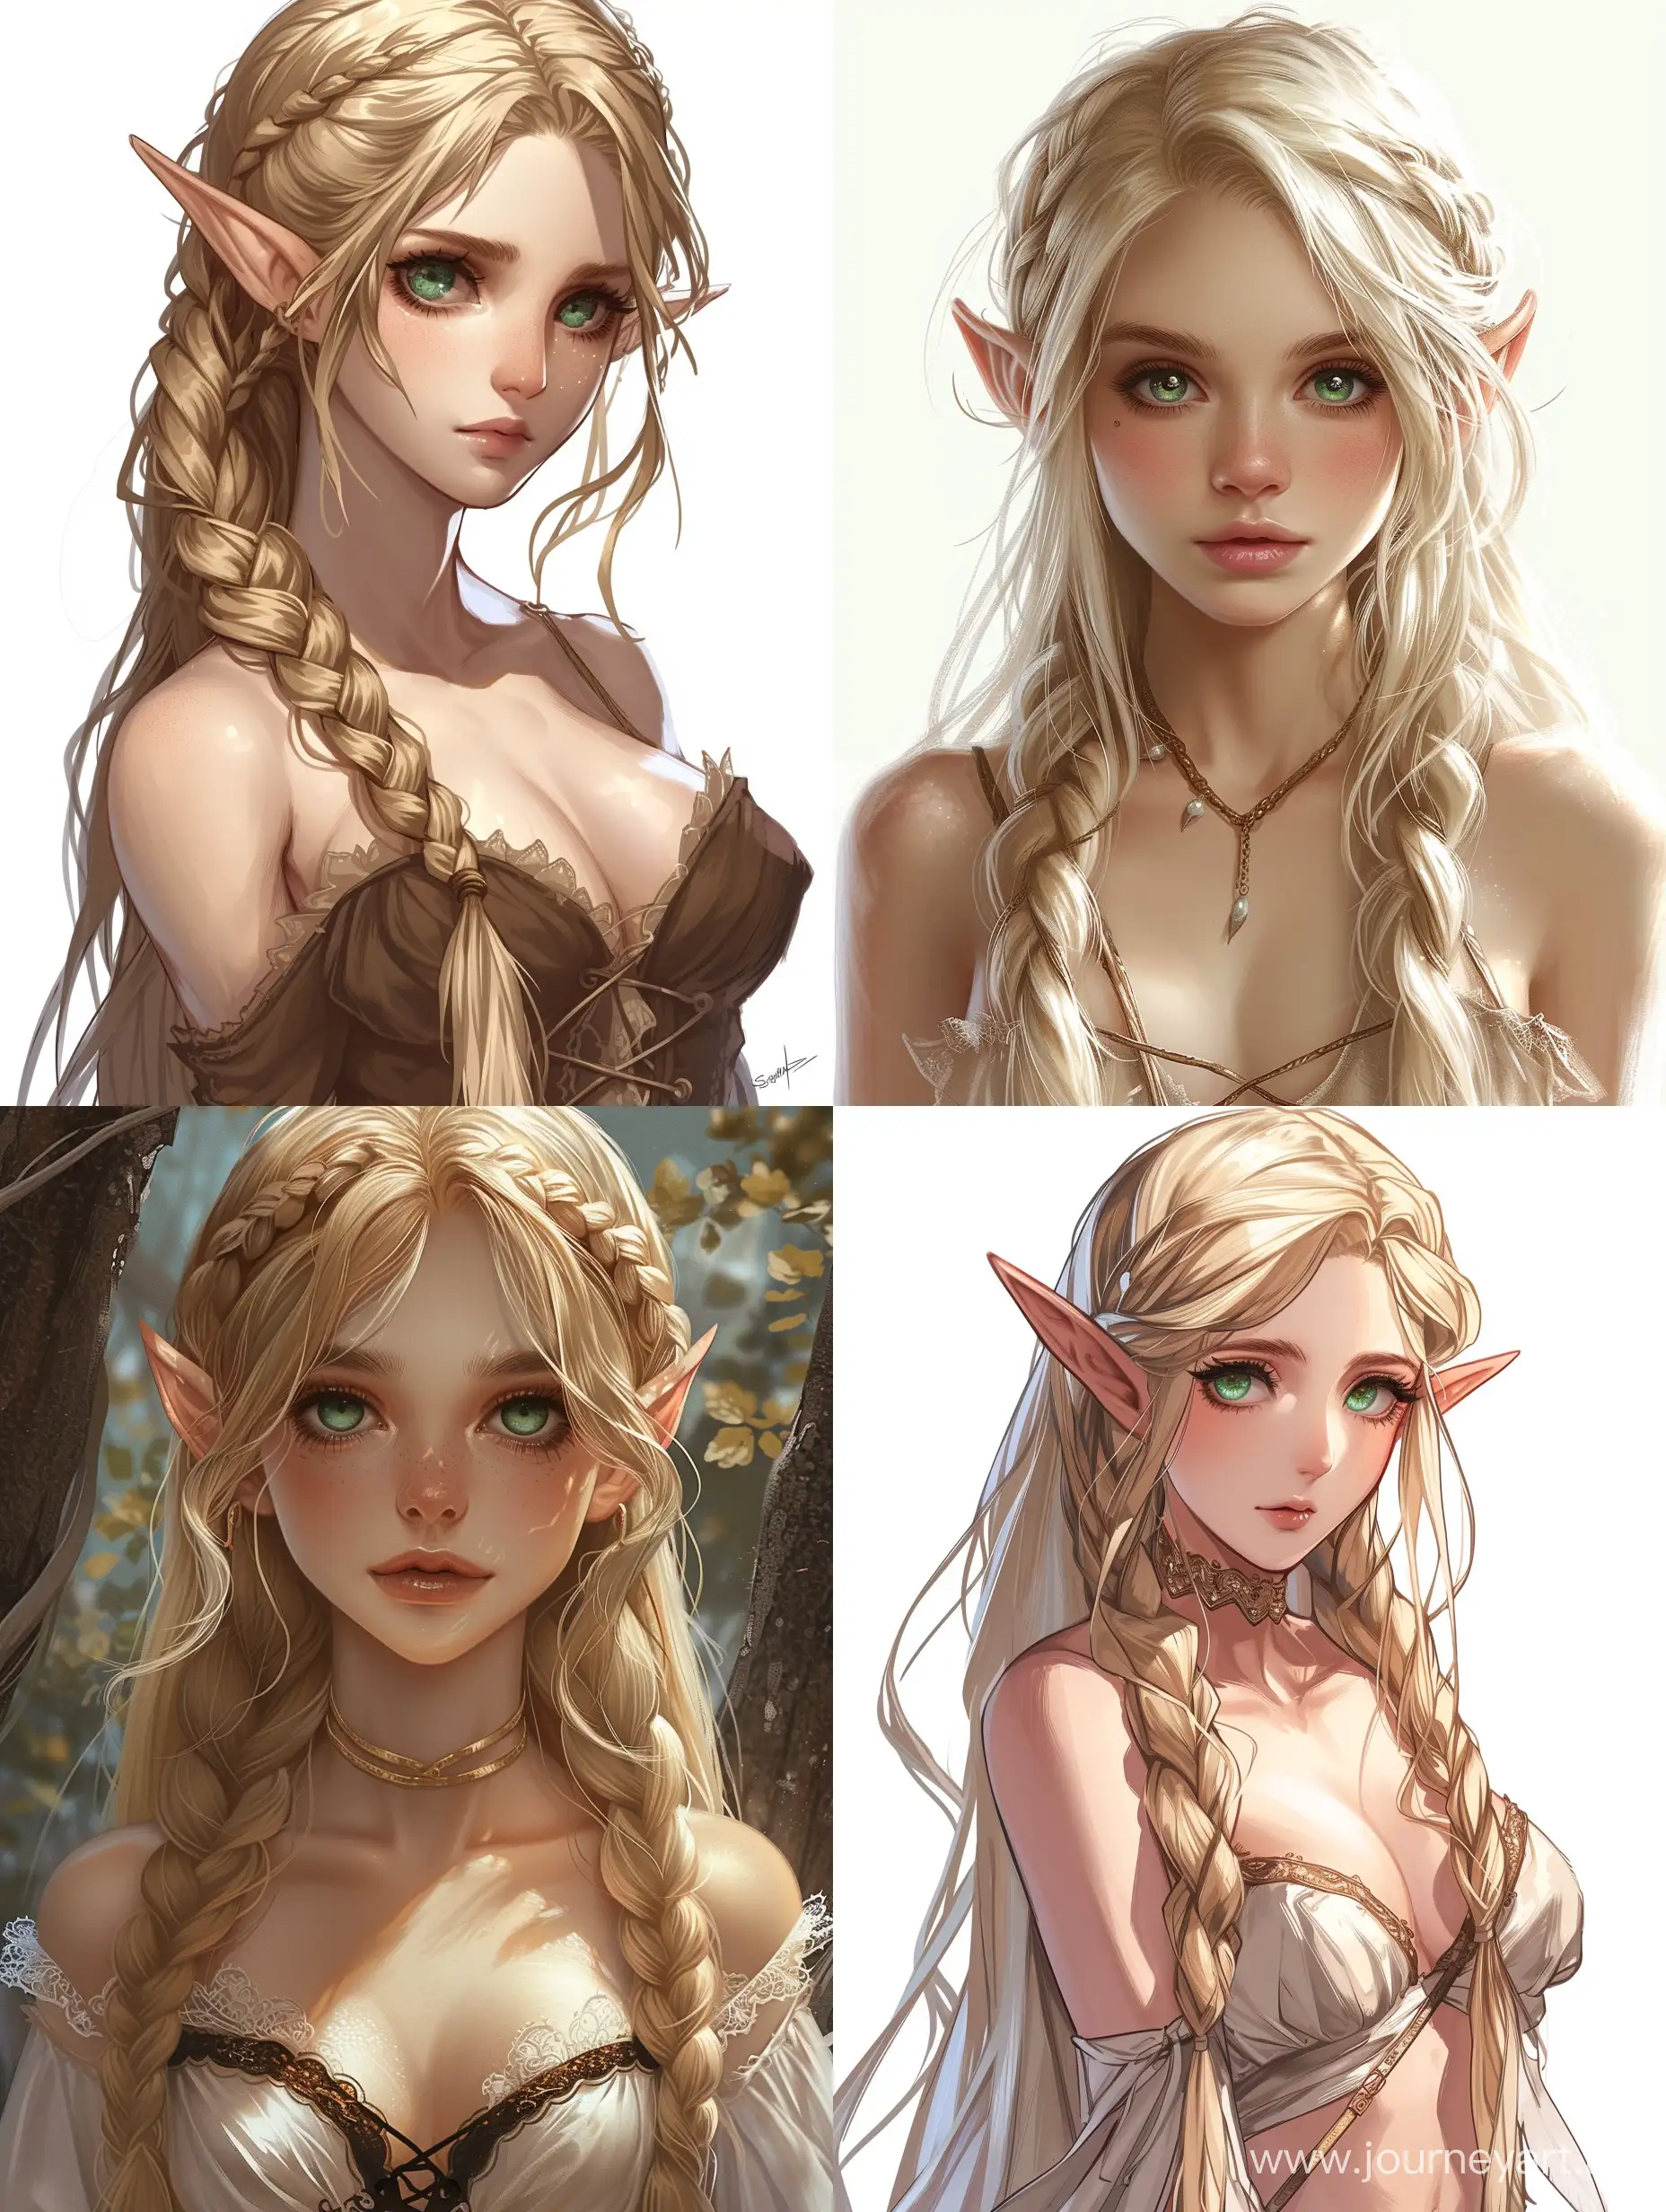 Enchanting-Blonde-Elf-Girl-with-Emerald-Eyes-and-Elegant-Etiquette